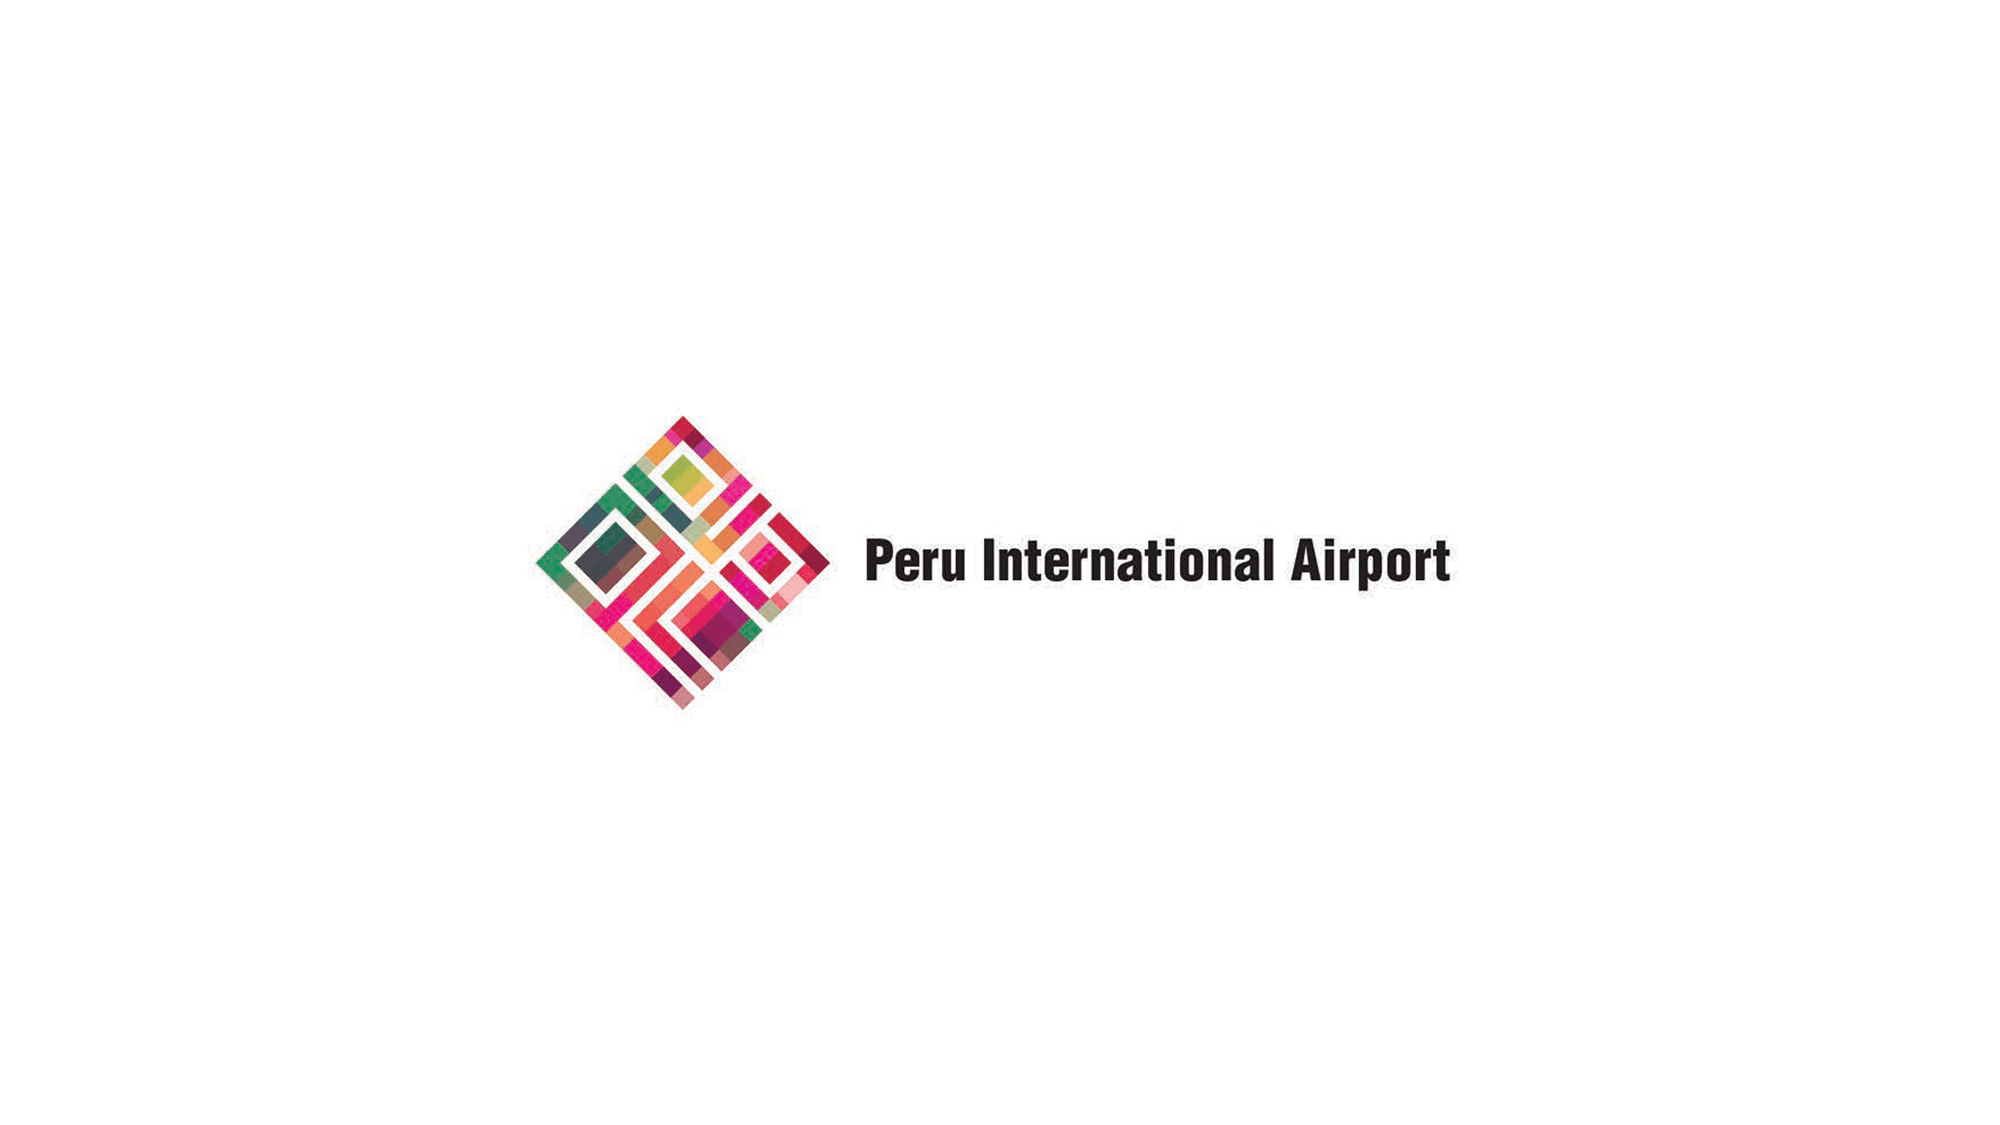 Exercise Logo - Exercise: Logo design for Peru International Airport